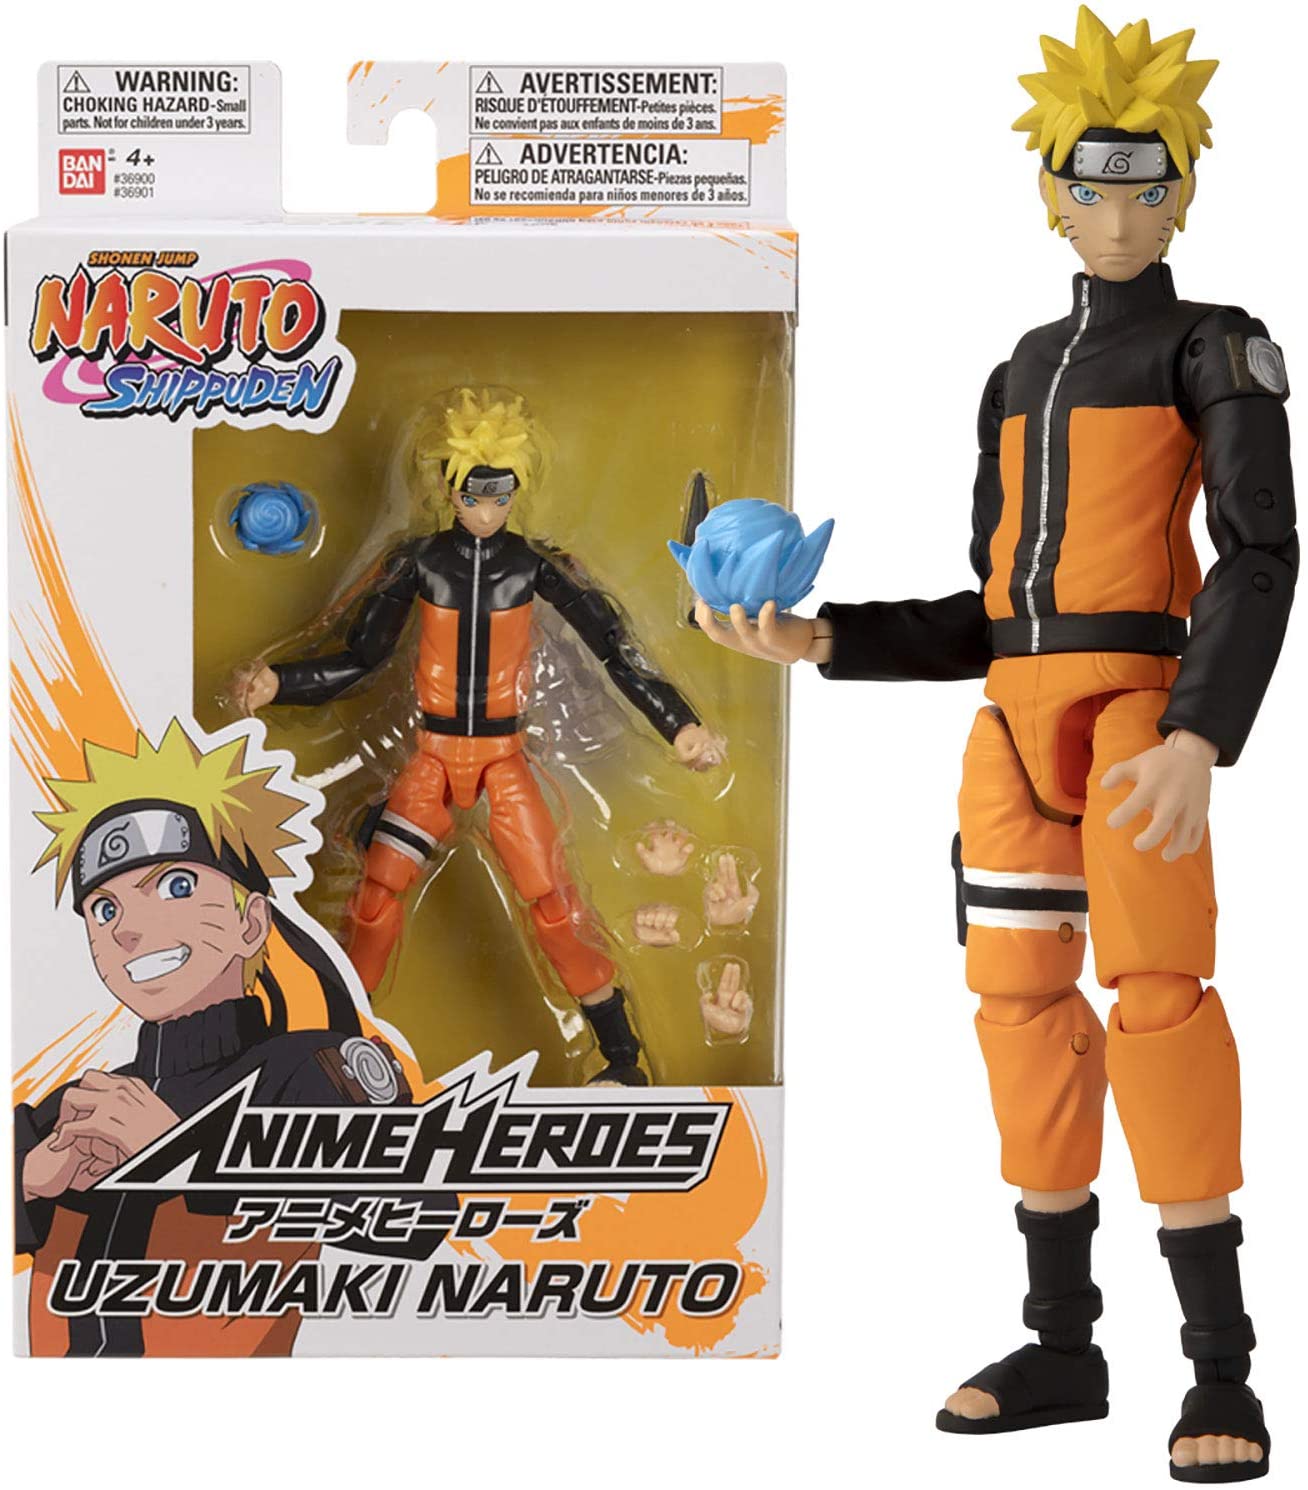 Bandai Shippuden Anime Heroes Figure, 17 Cm, Naruto Uzumaki - 36901, Multi-